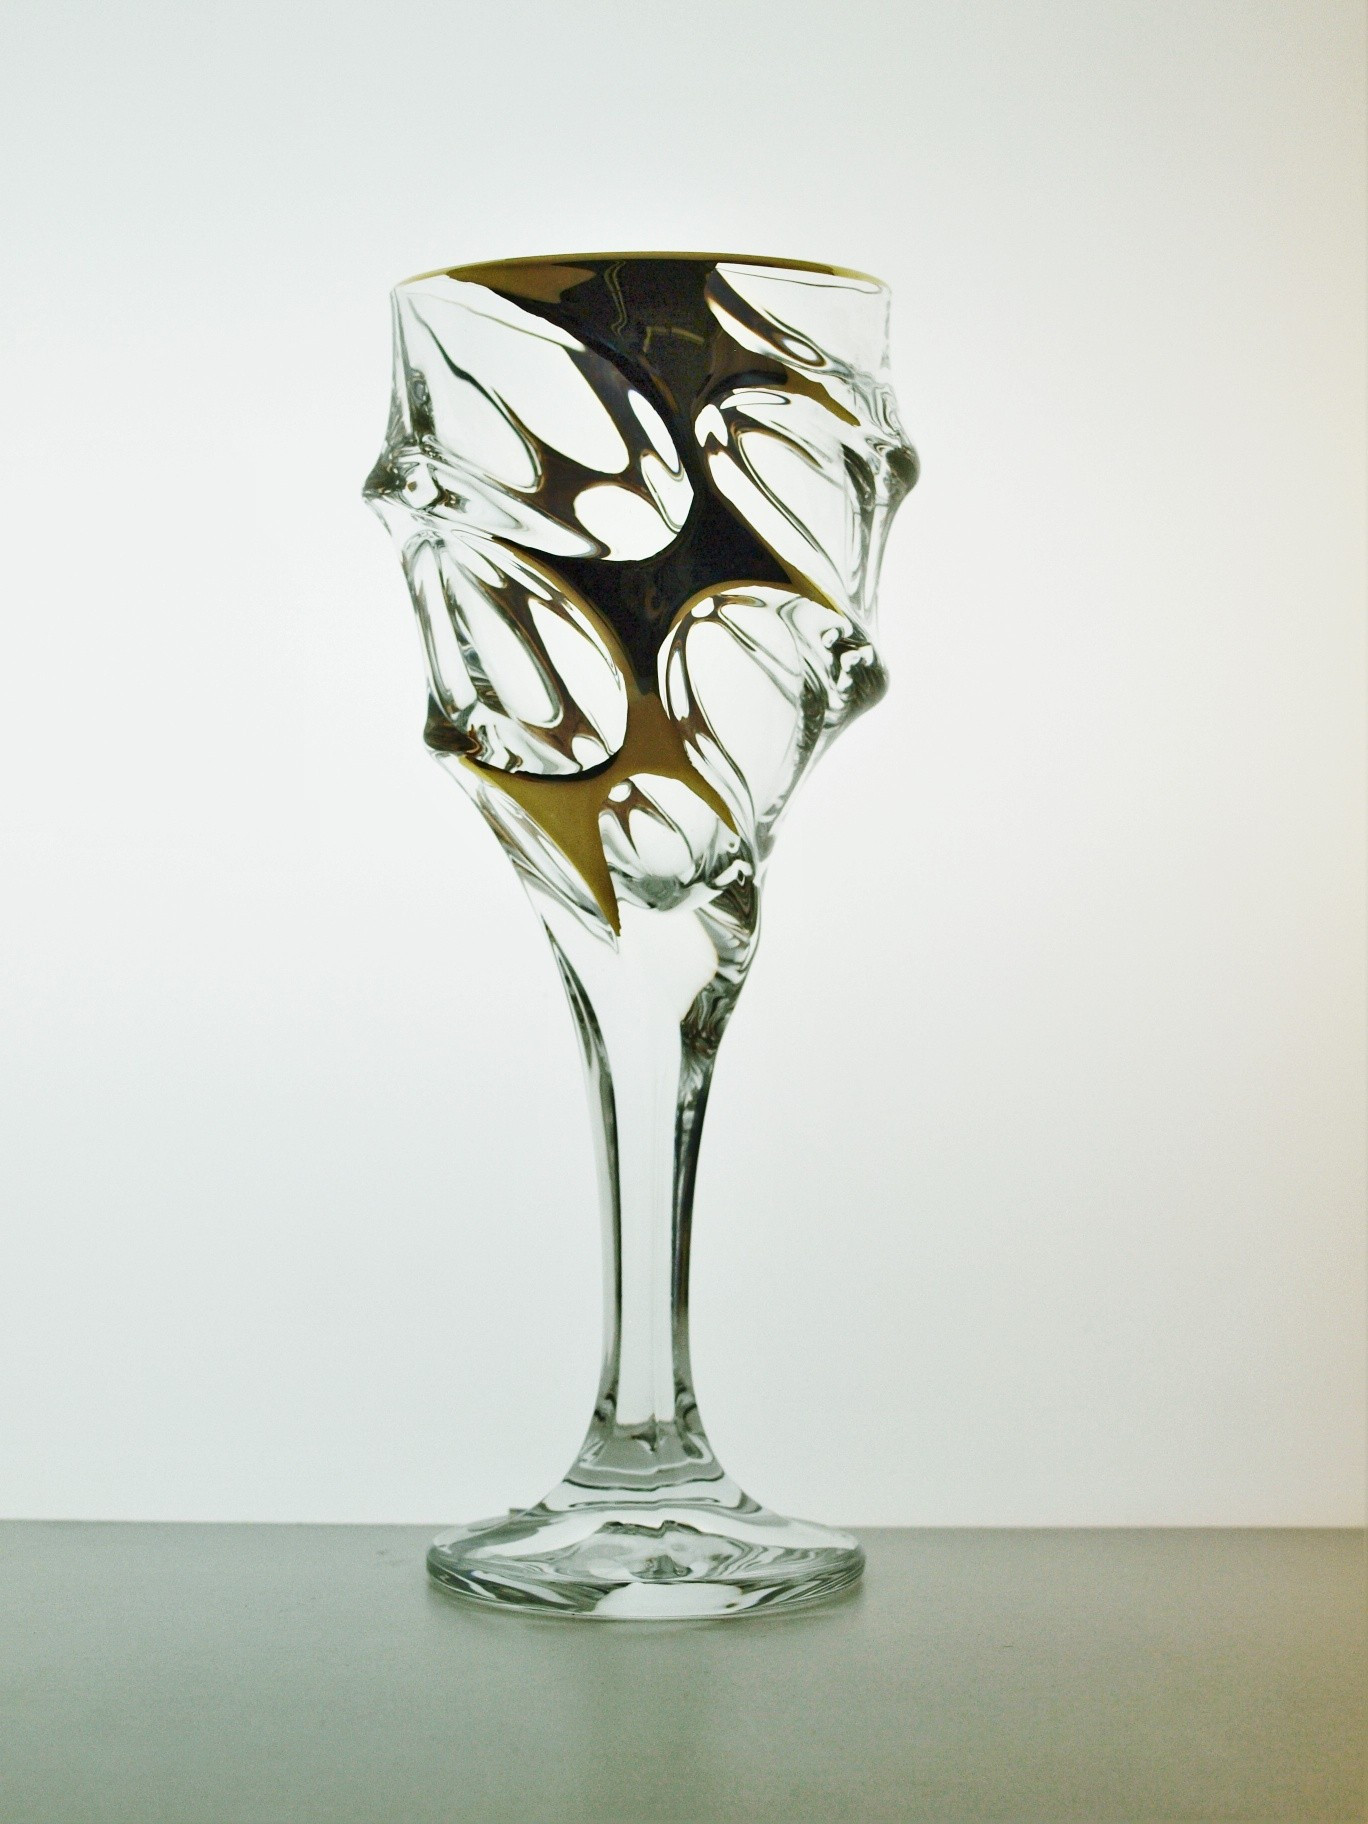 bohemia czech republic lead crystal vase of glasses for white wine calypso golden regarding wine glasses calypso golden 2 pcs or 6 pcs